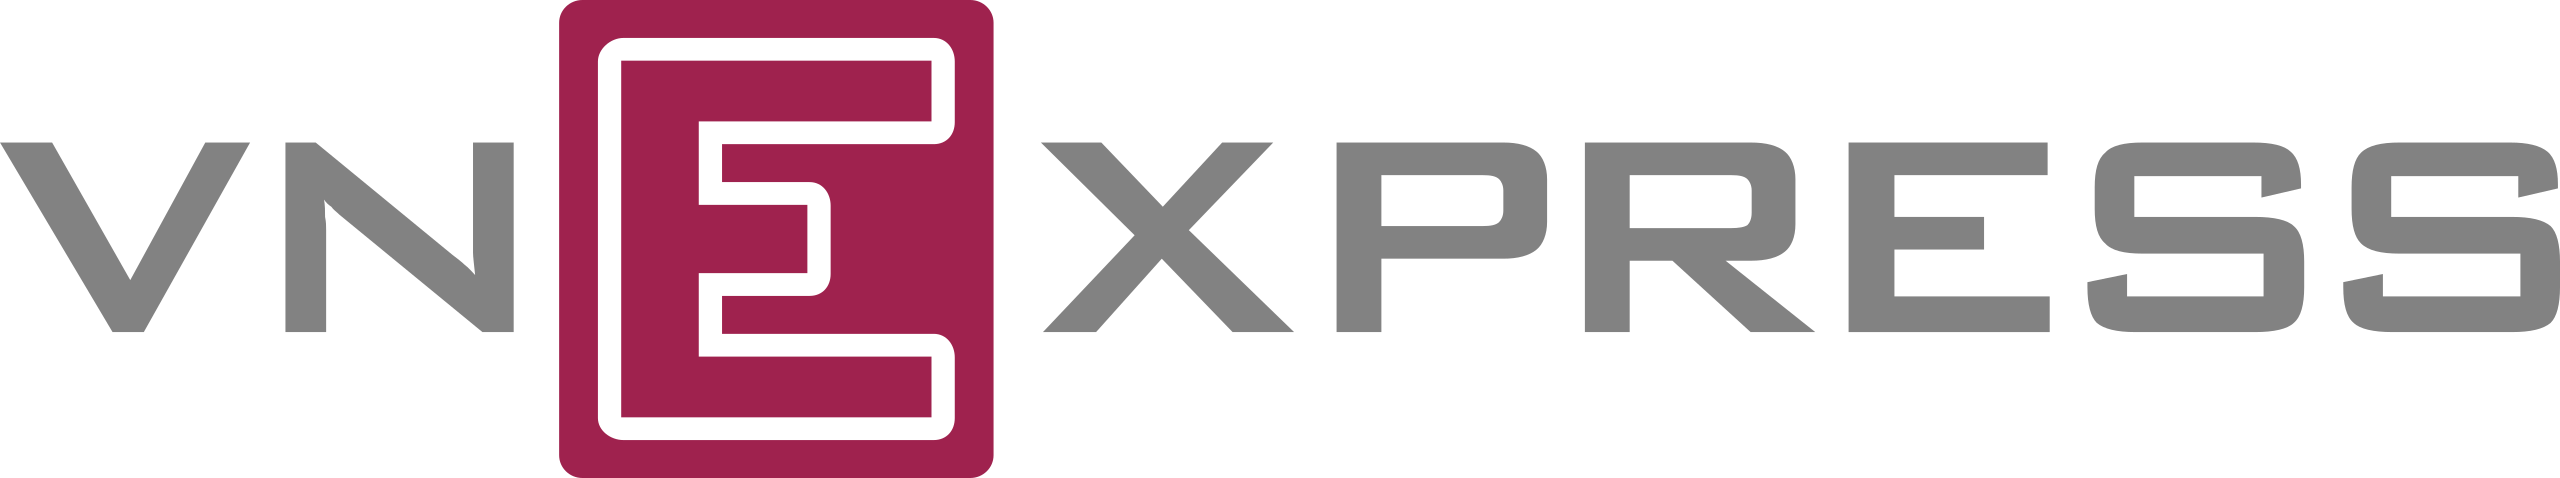 Vnexpress.net Logo.svg